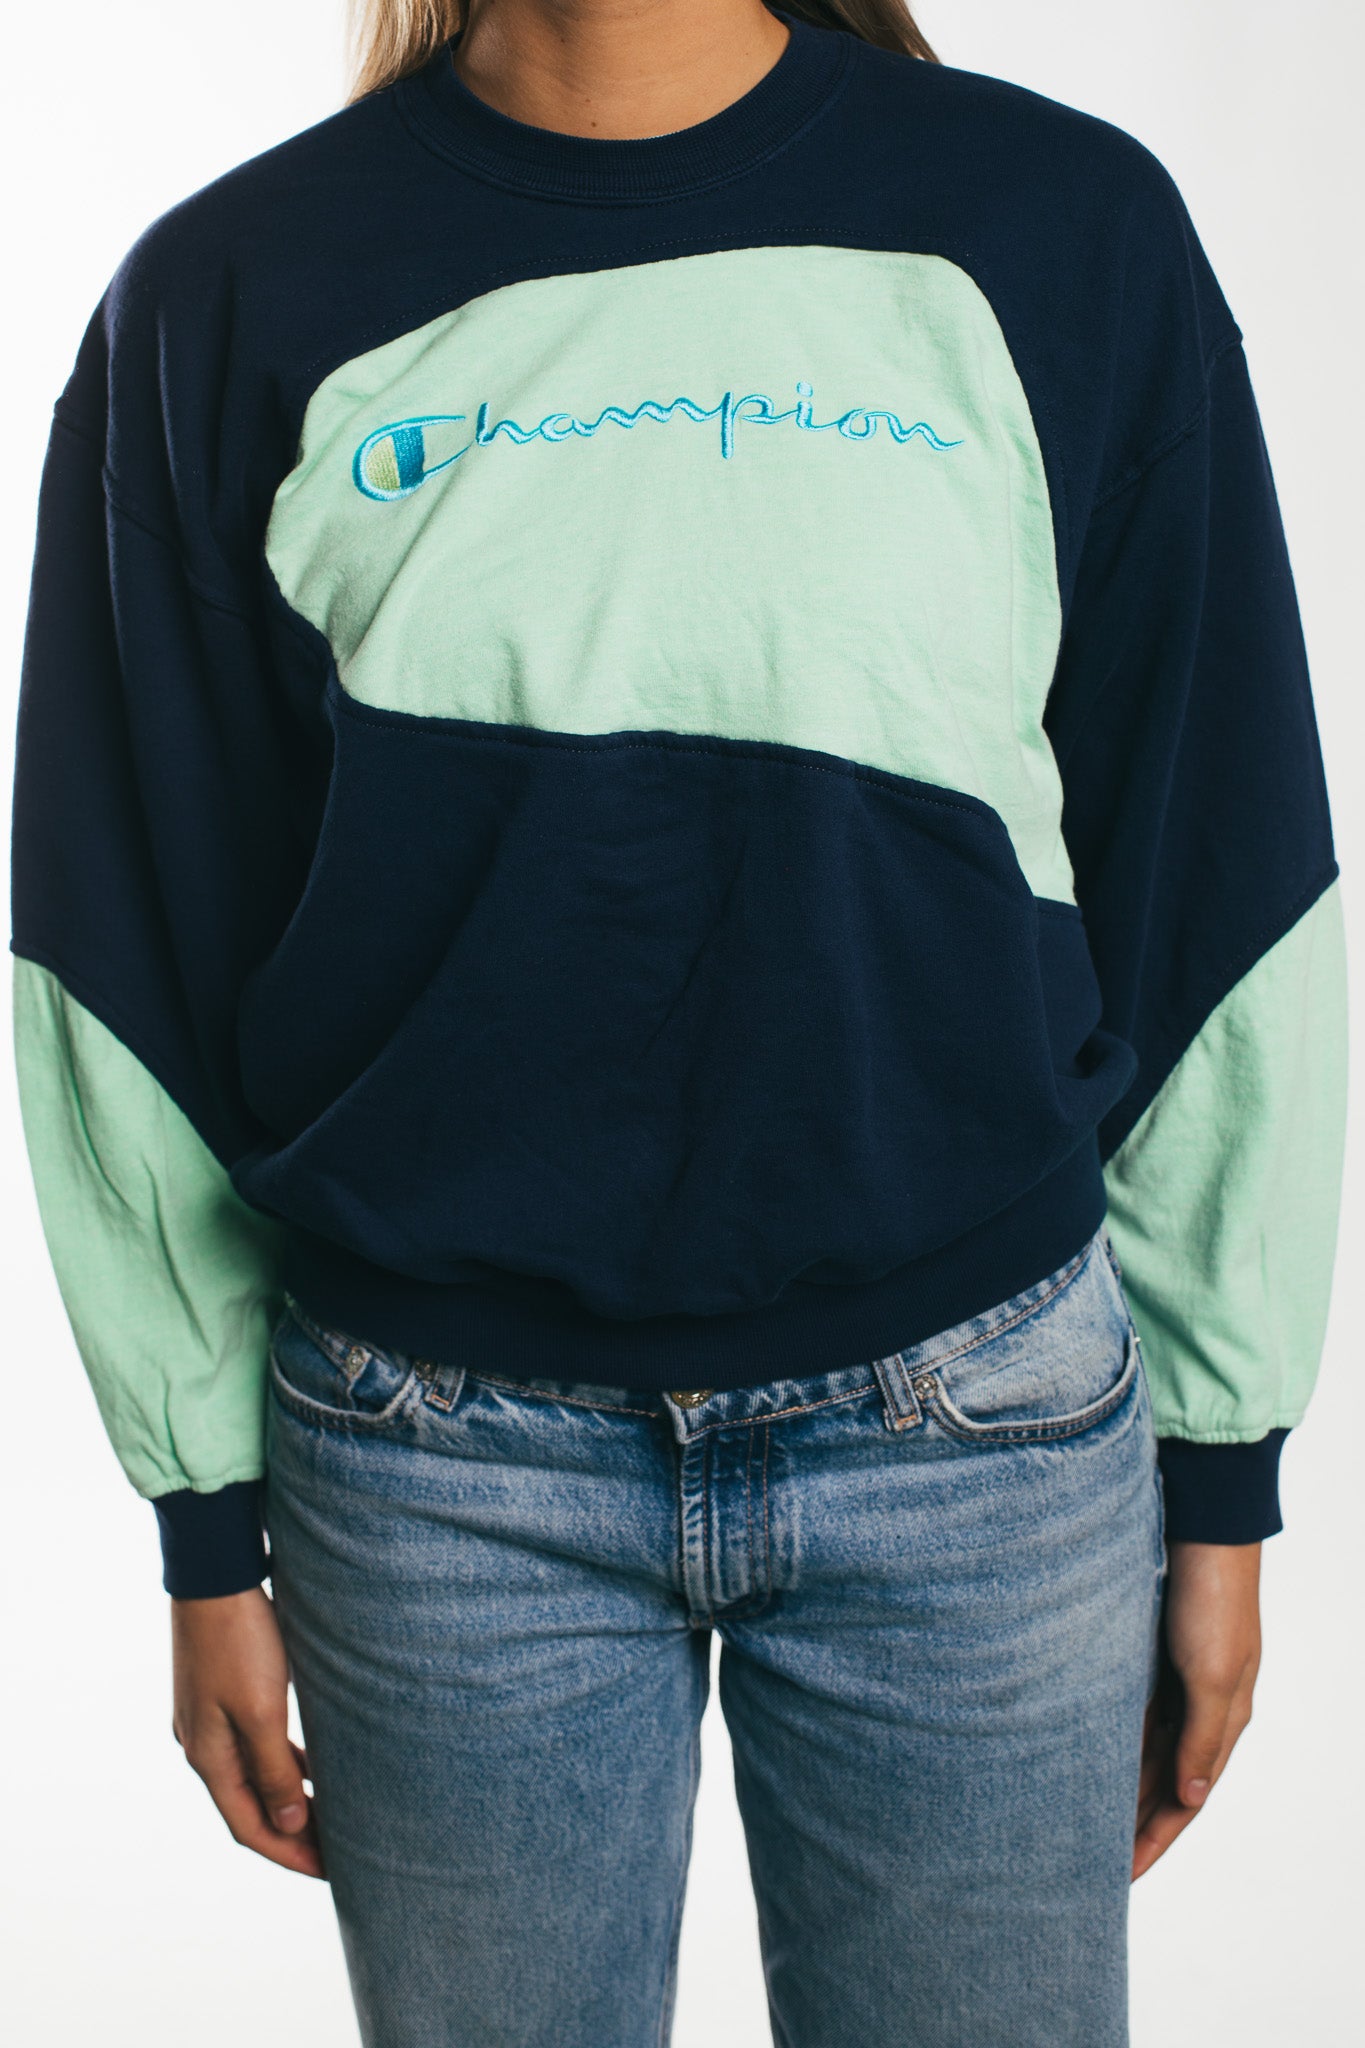 Champion - Sweatshirt (S)